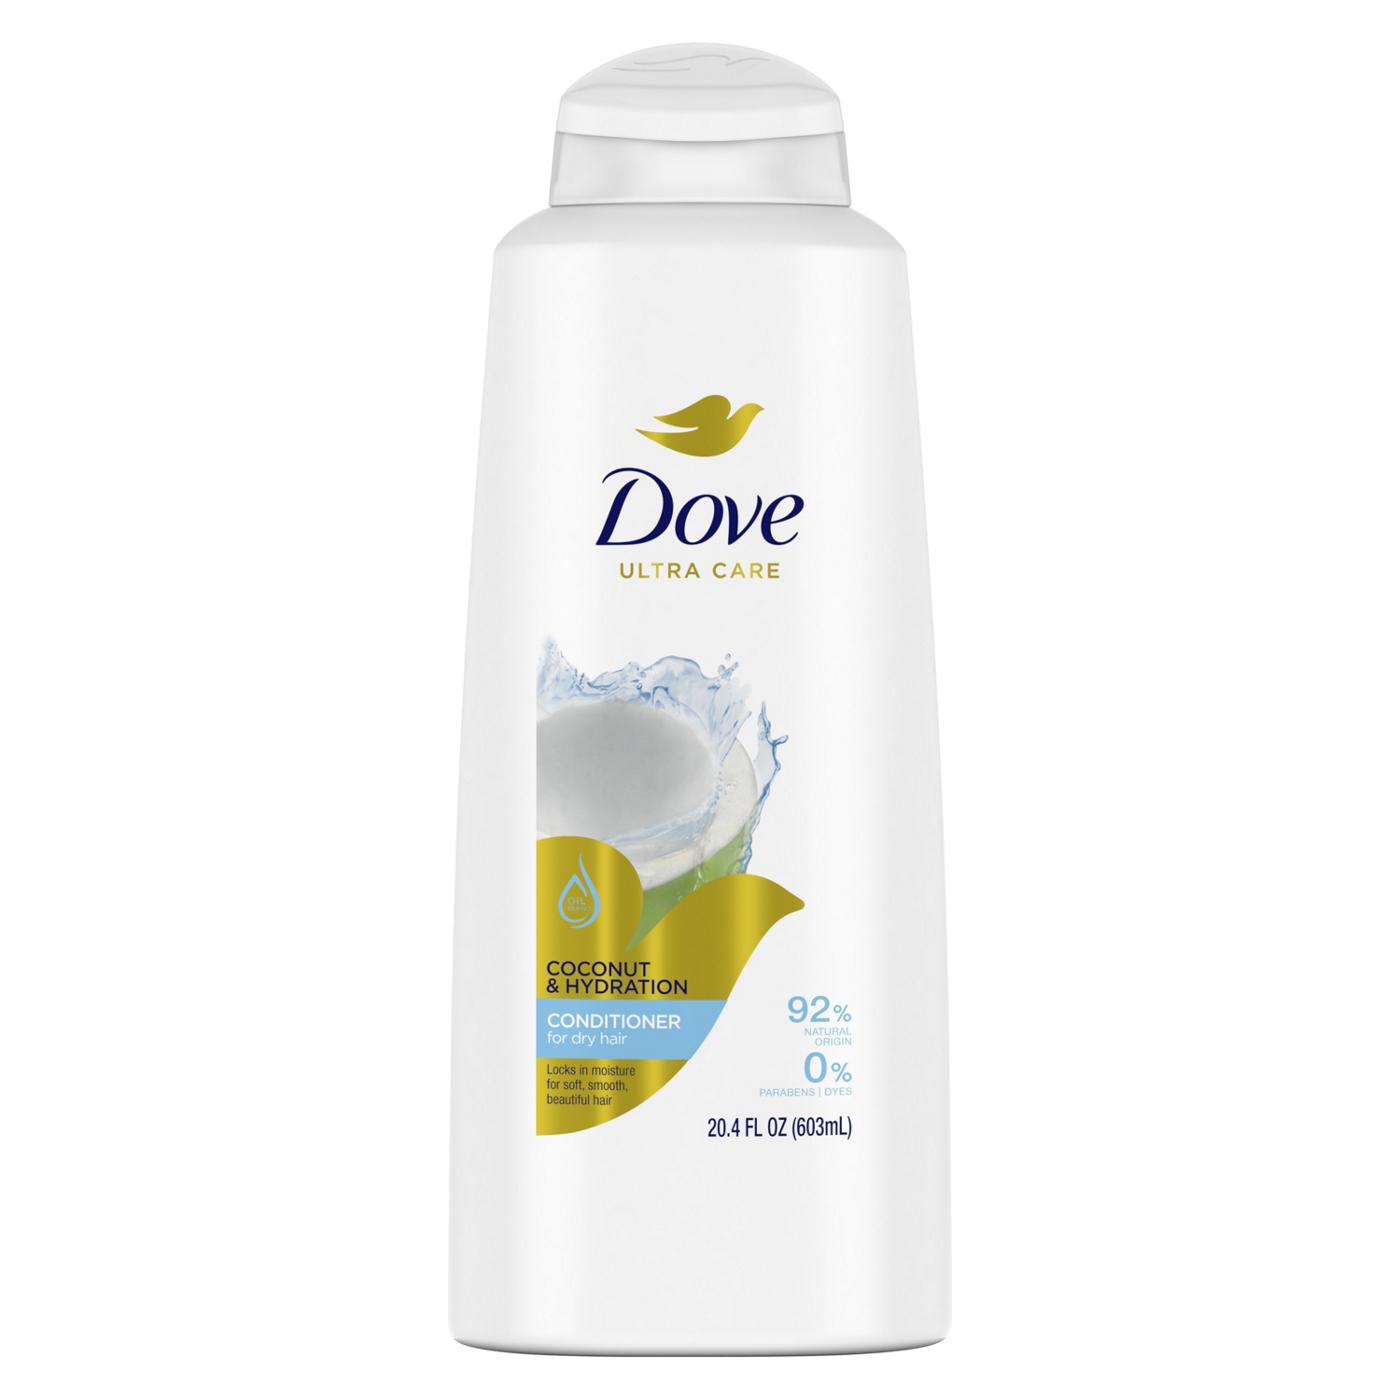 Dove Ultra Care Conditioner - Coconut & Hydration; image 1 of 12